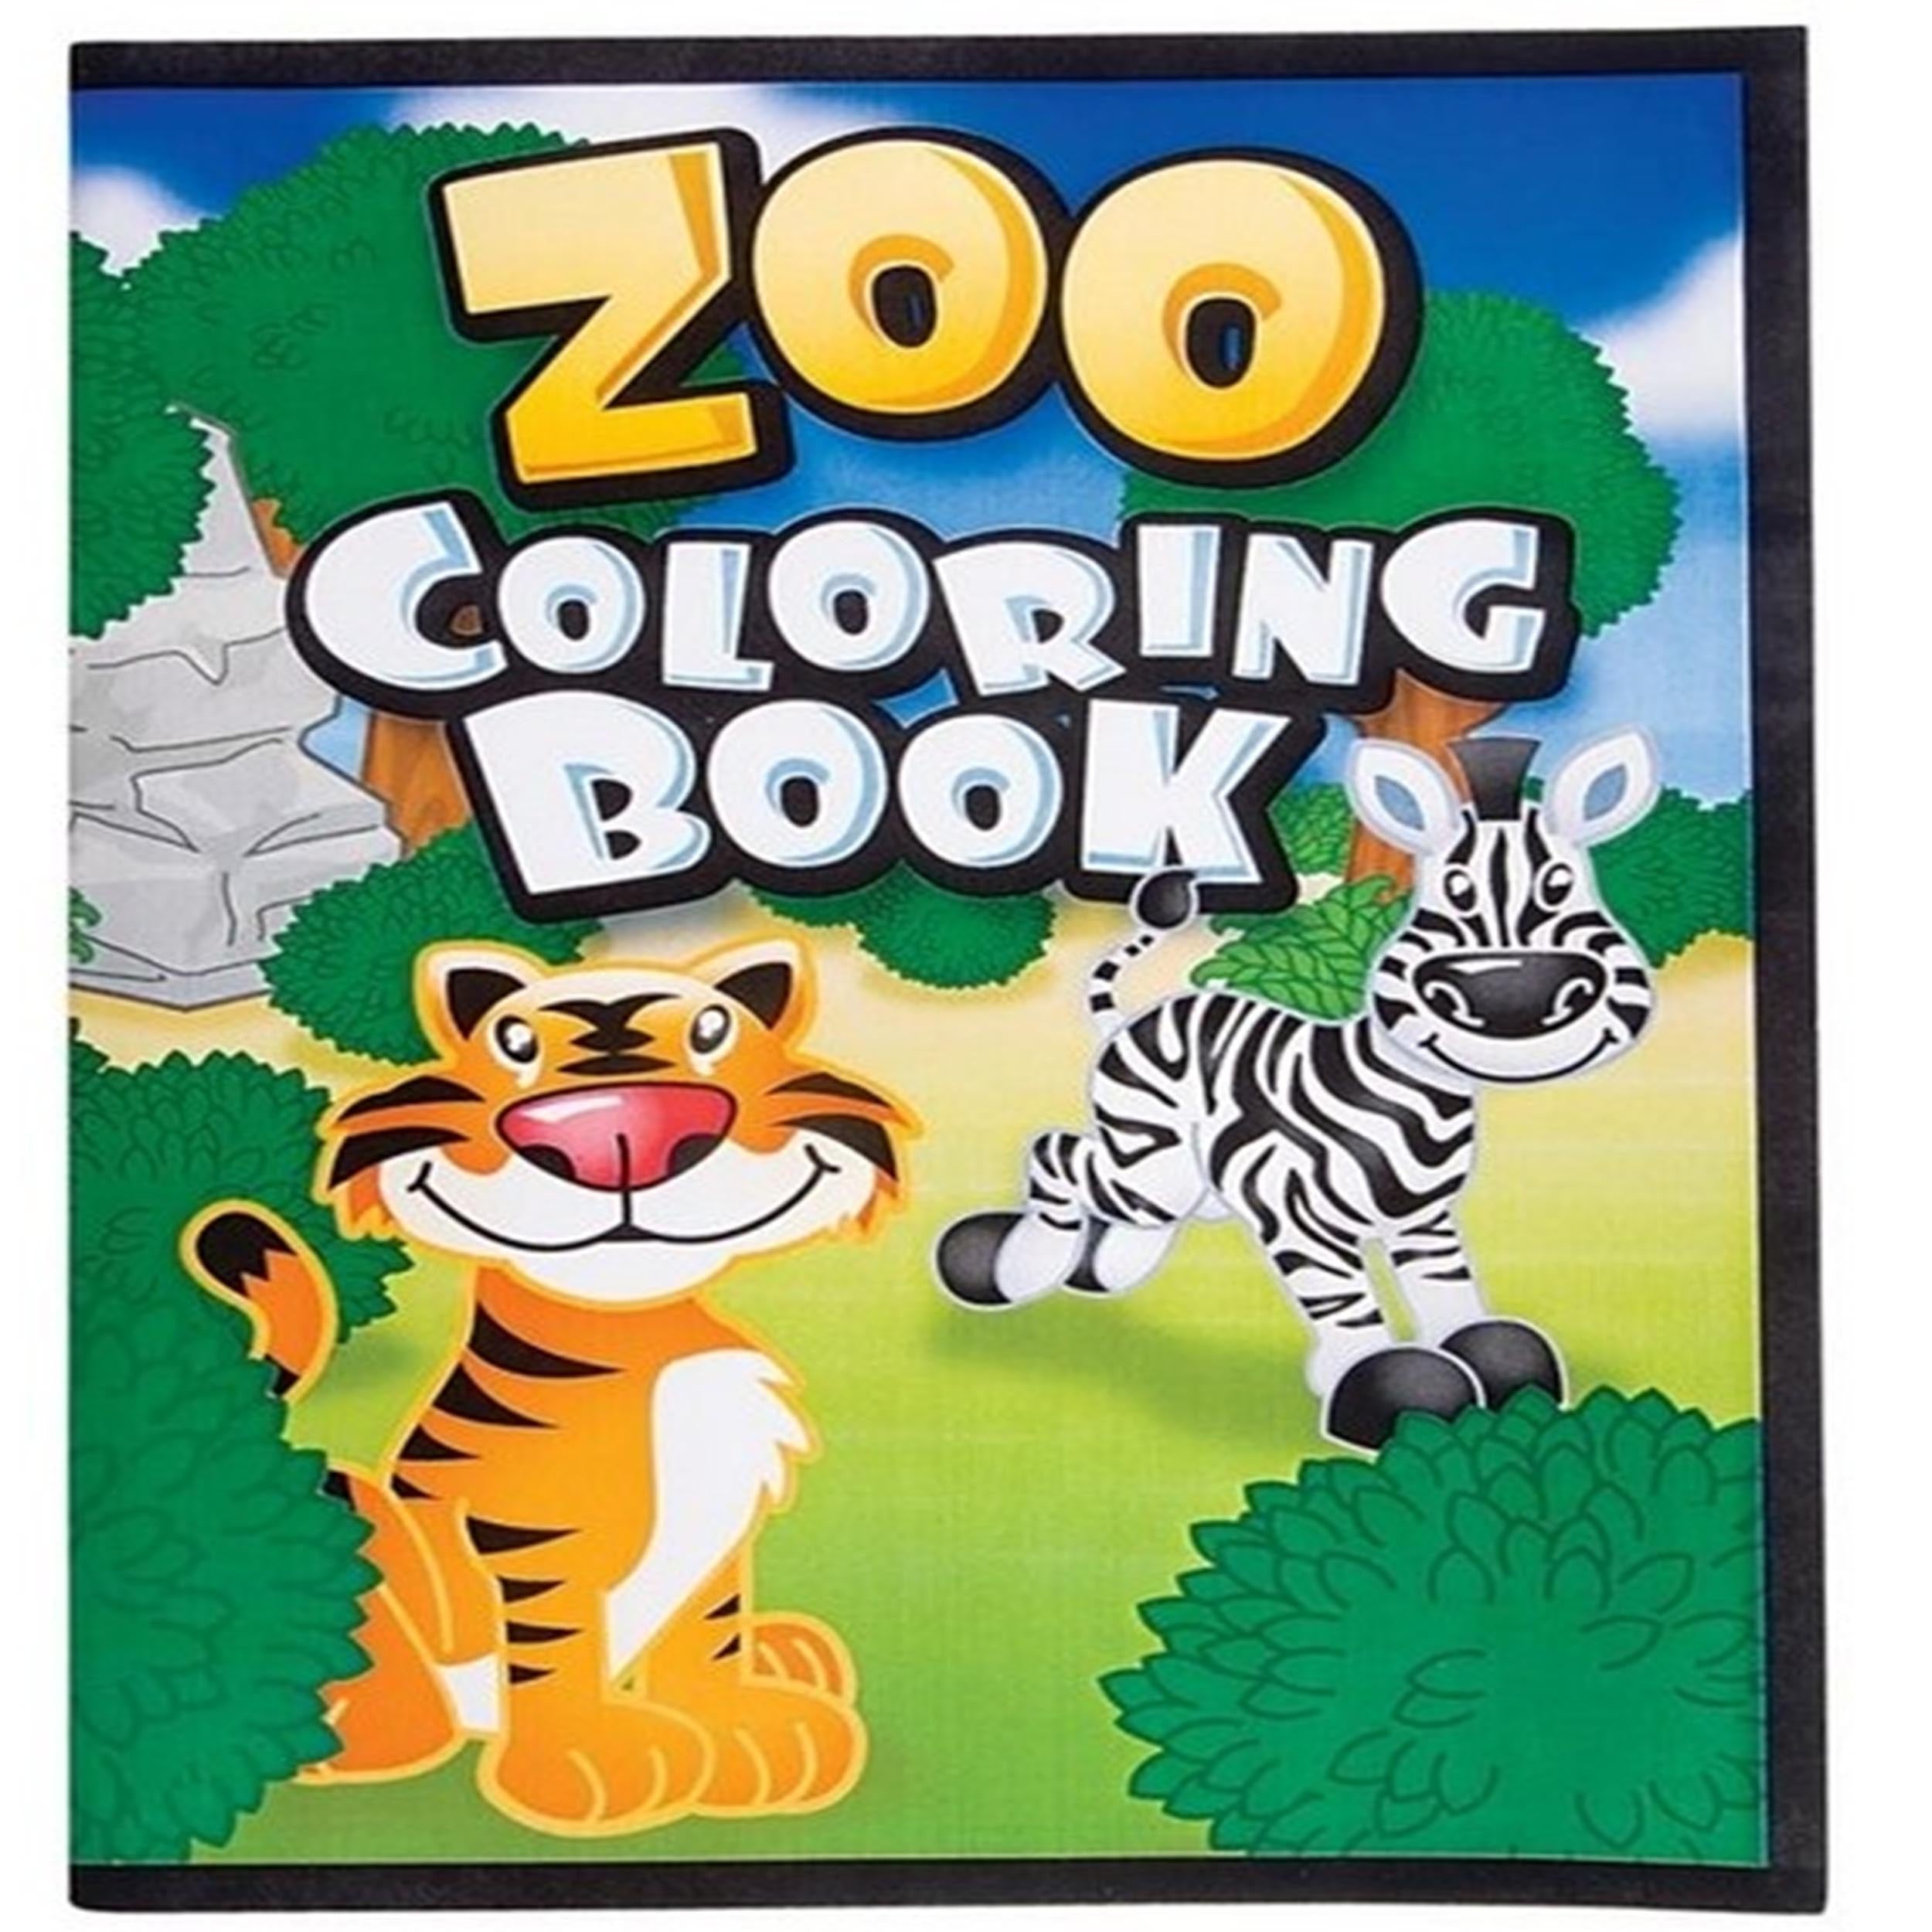 Zoo Animal Coloring Books (1 Dozen=$9.99)